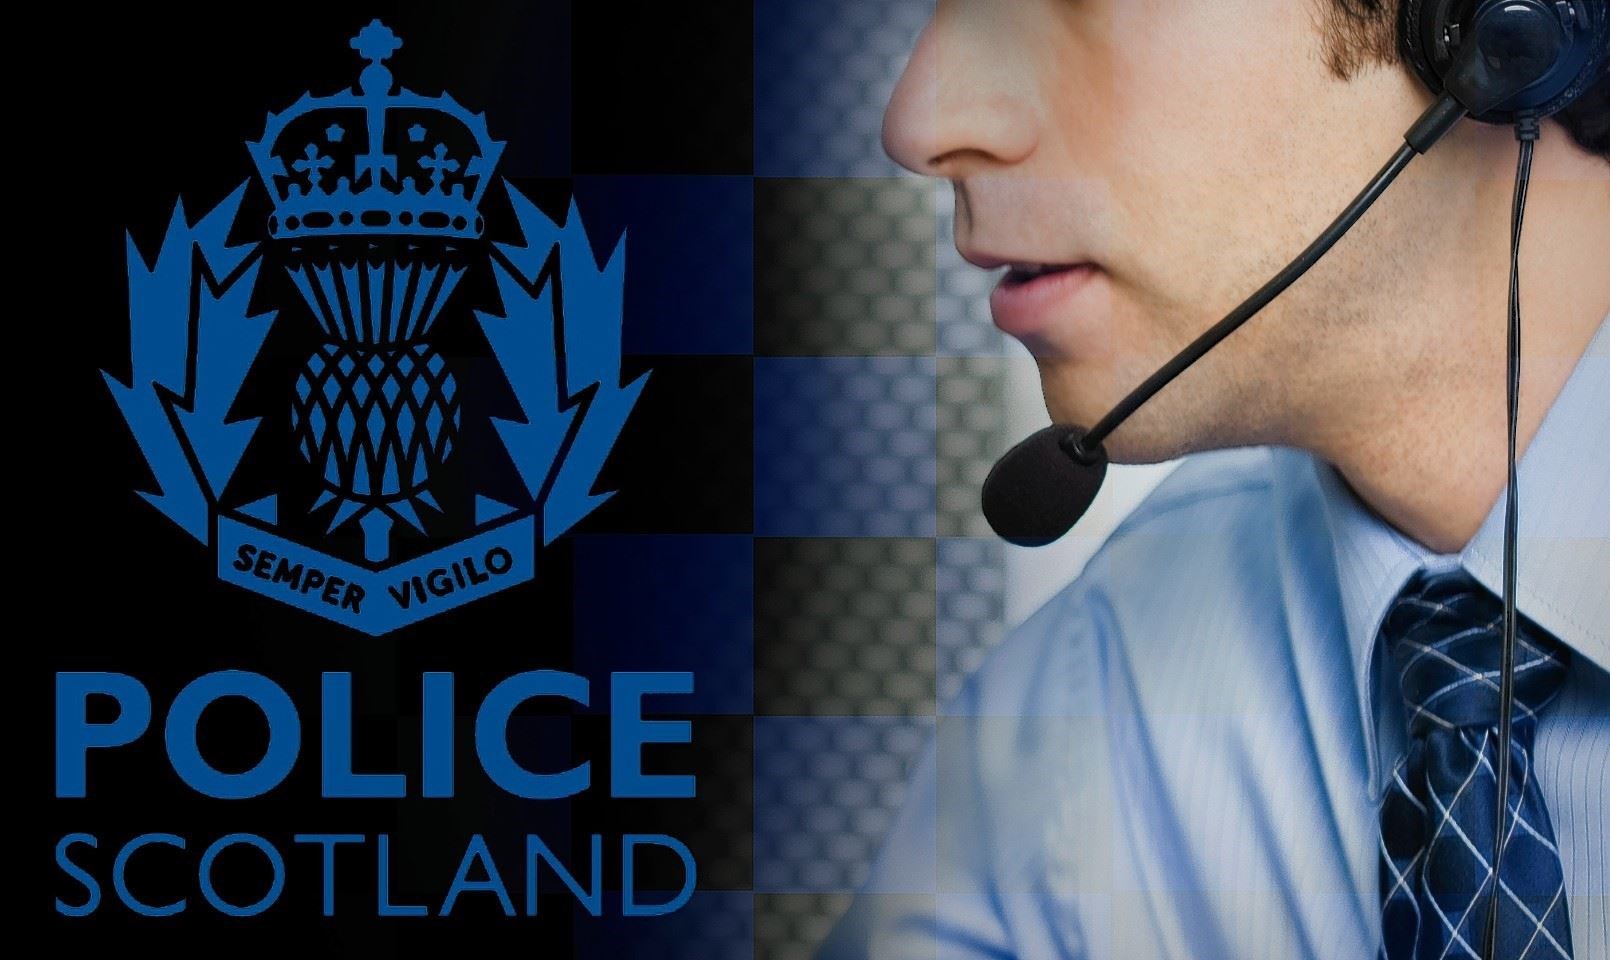 POLICE SCOTLAND LOGO and generic call centre staff